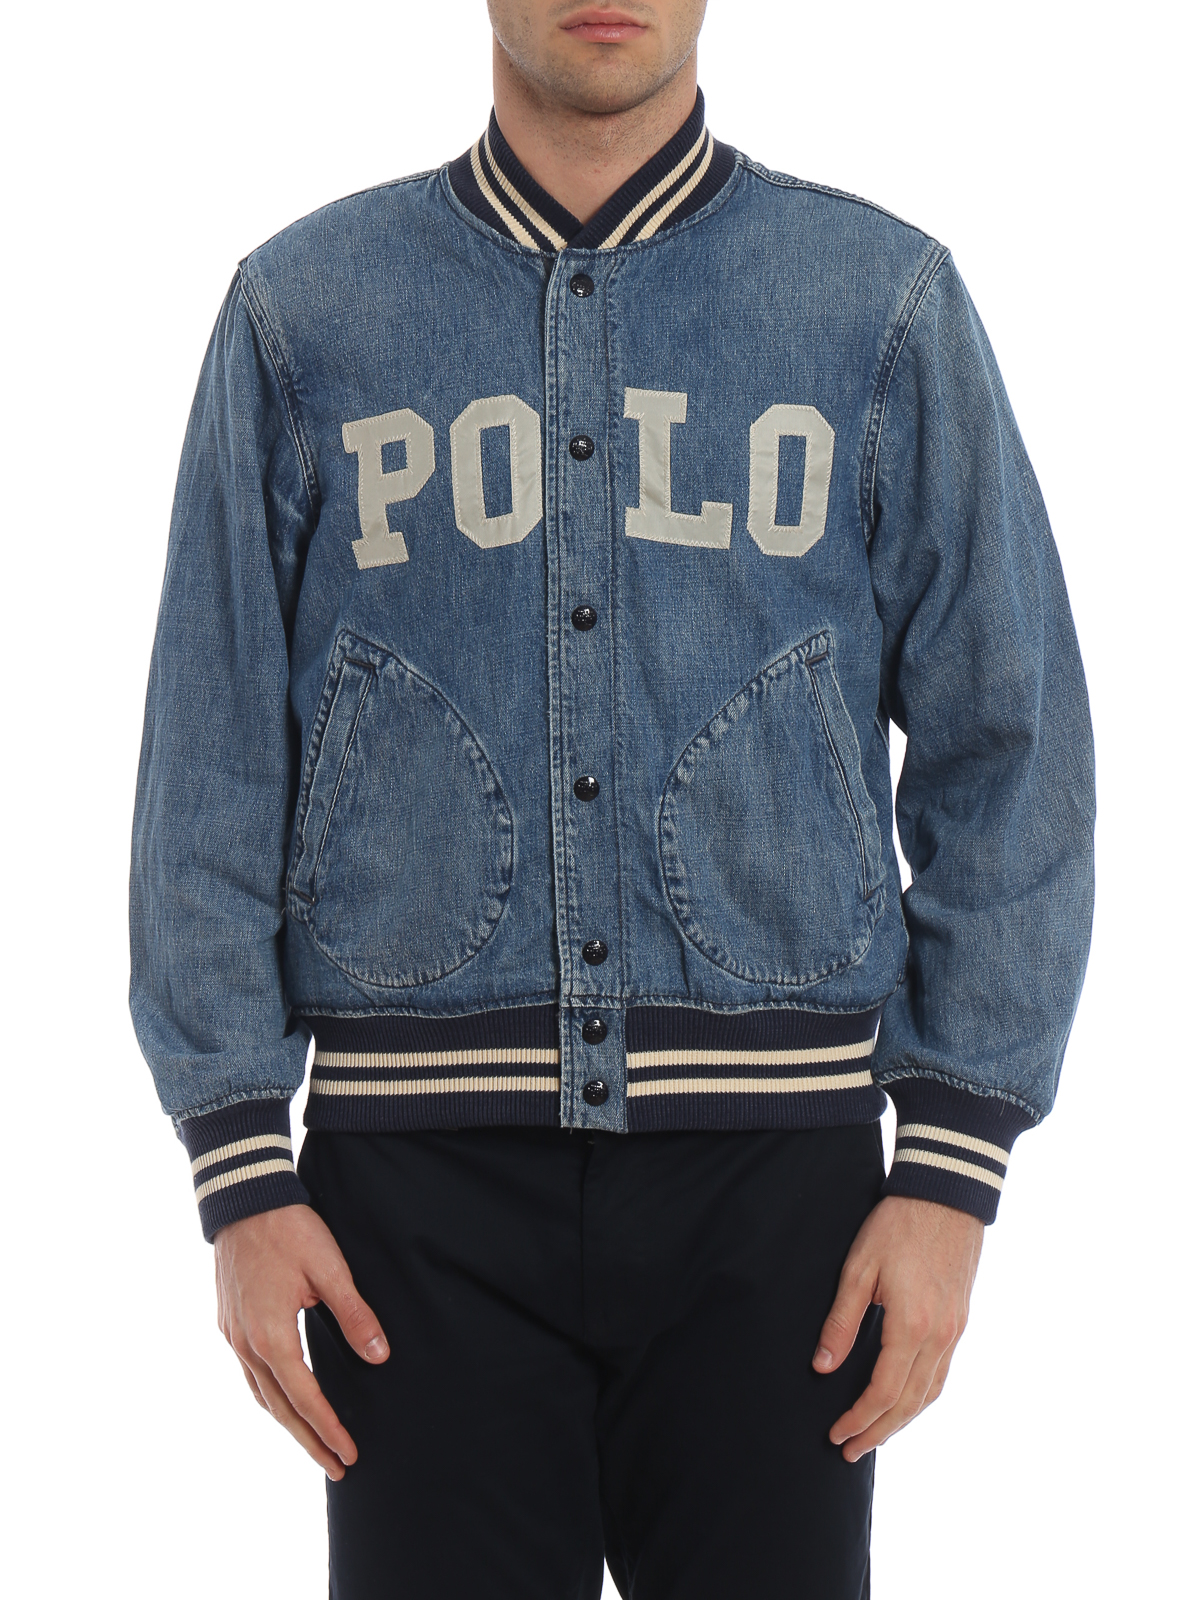 bomber jacket and polo